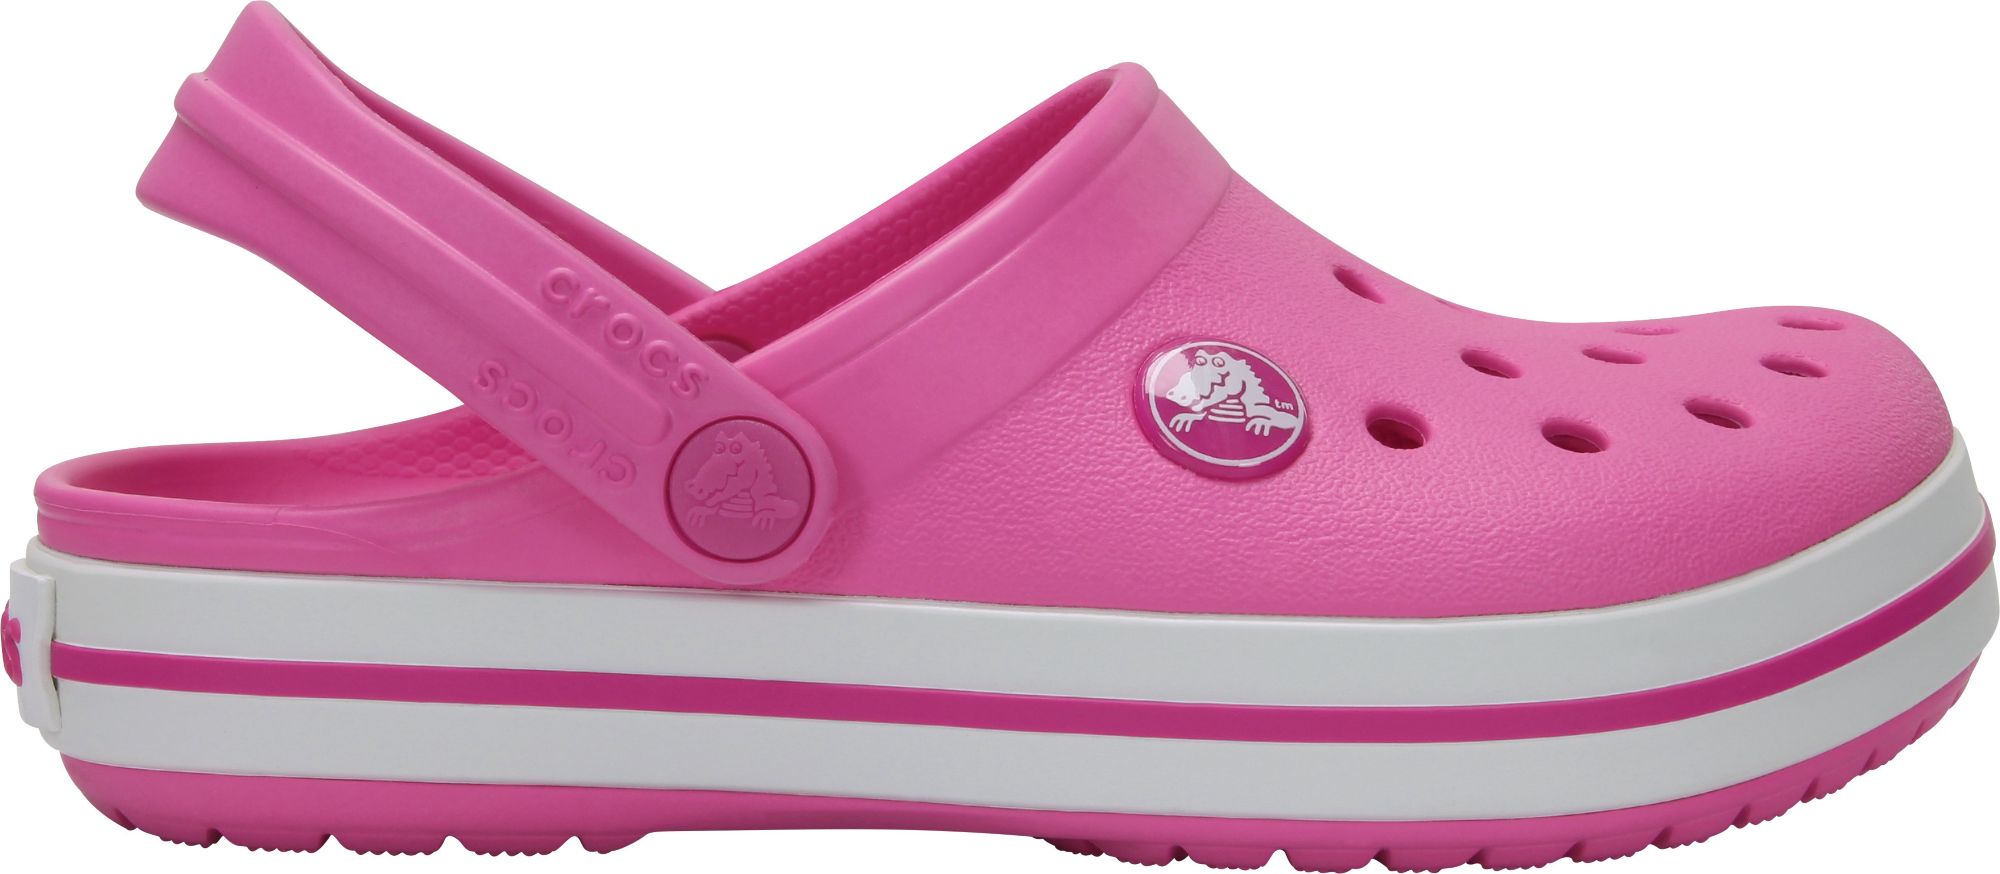 pink glitter crocs adults